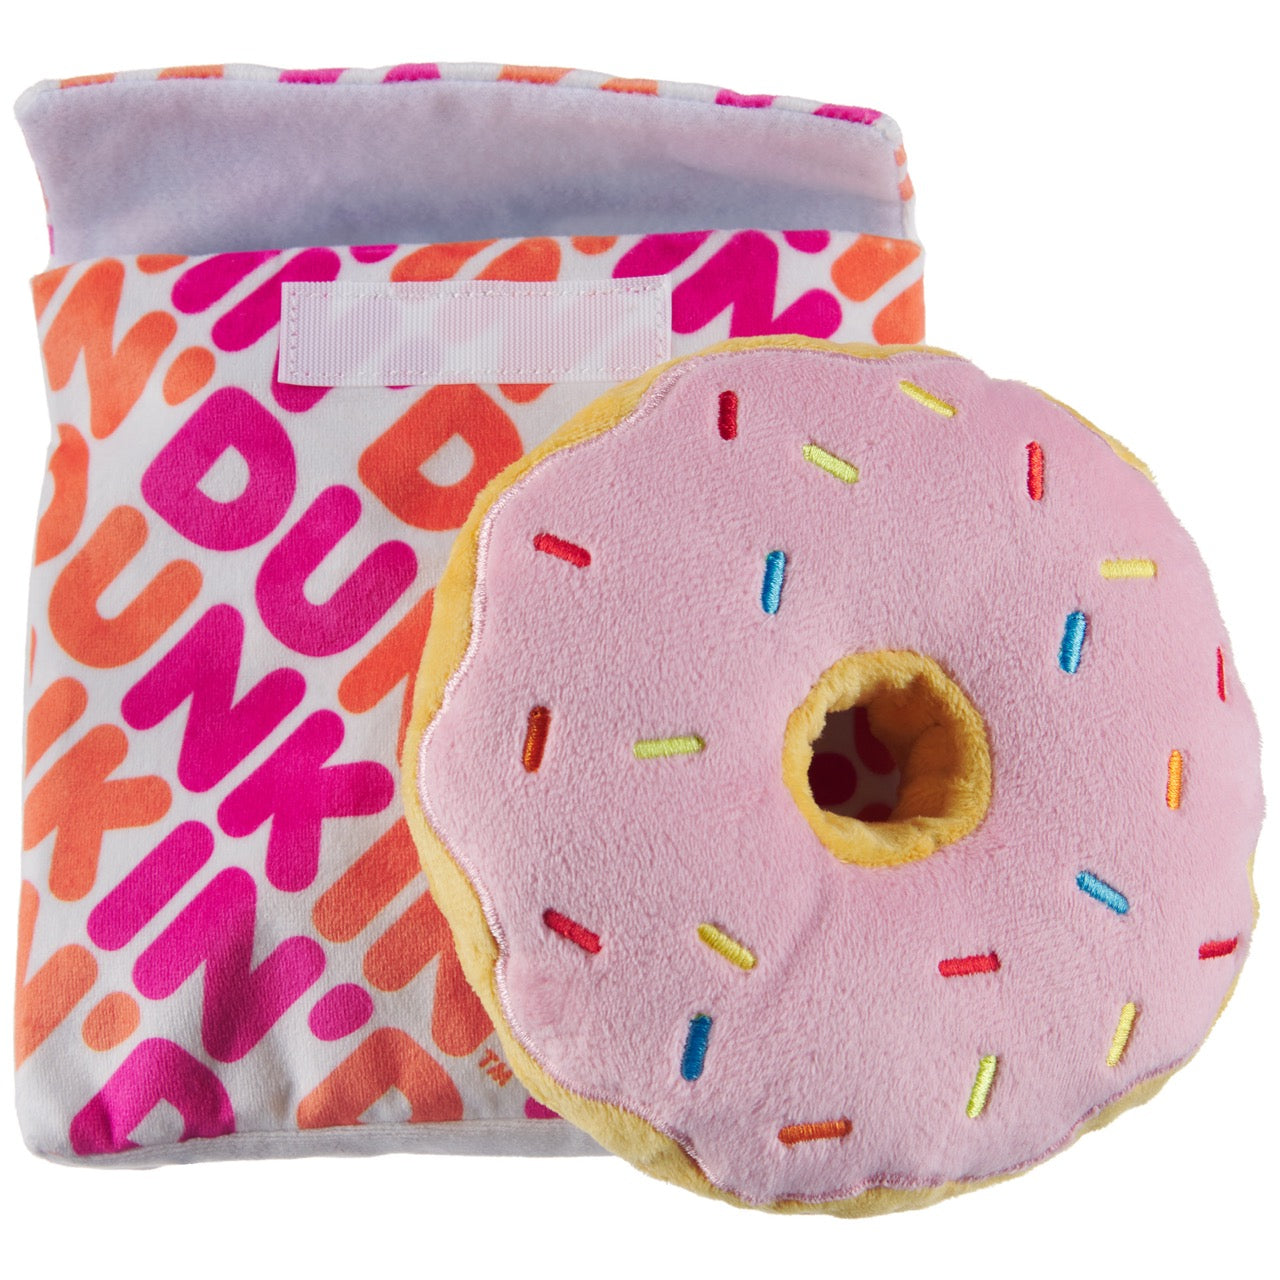 Dunkin'® Donut Bag Toy